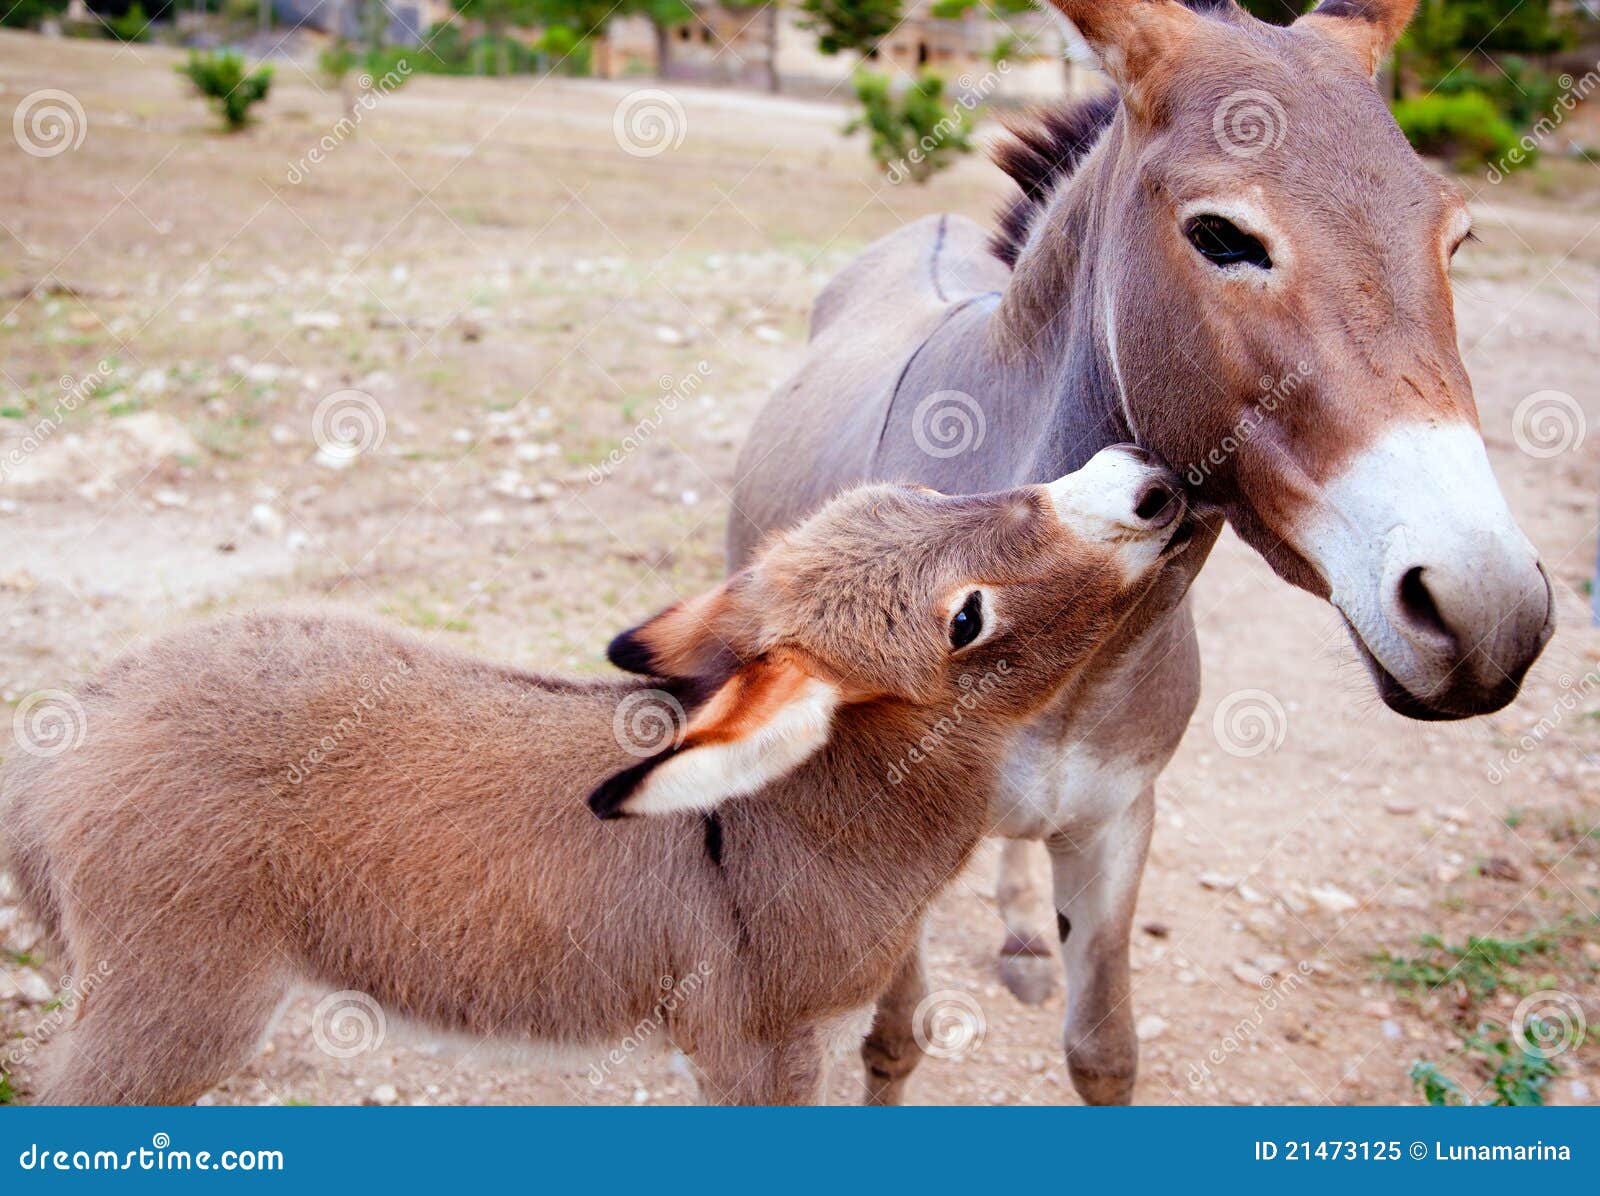 baby-donkey-mule-mother-21473125.jpg